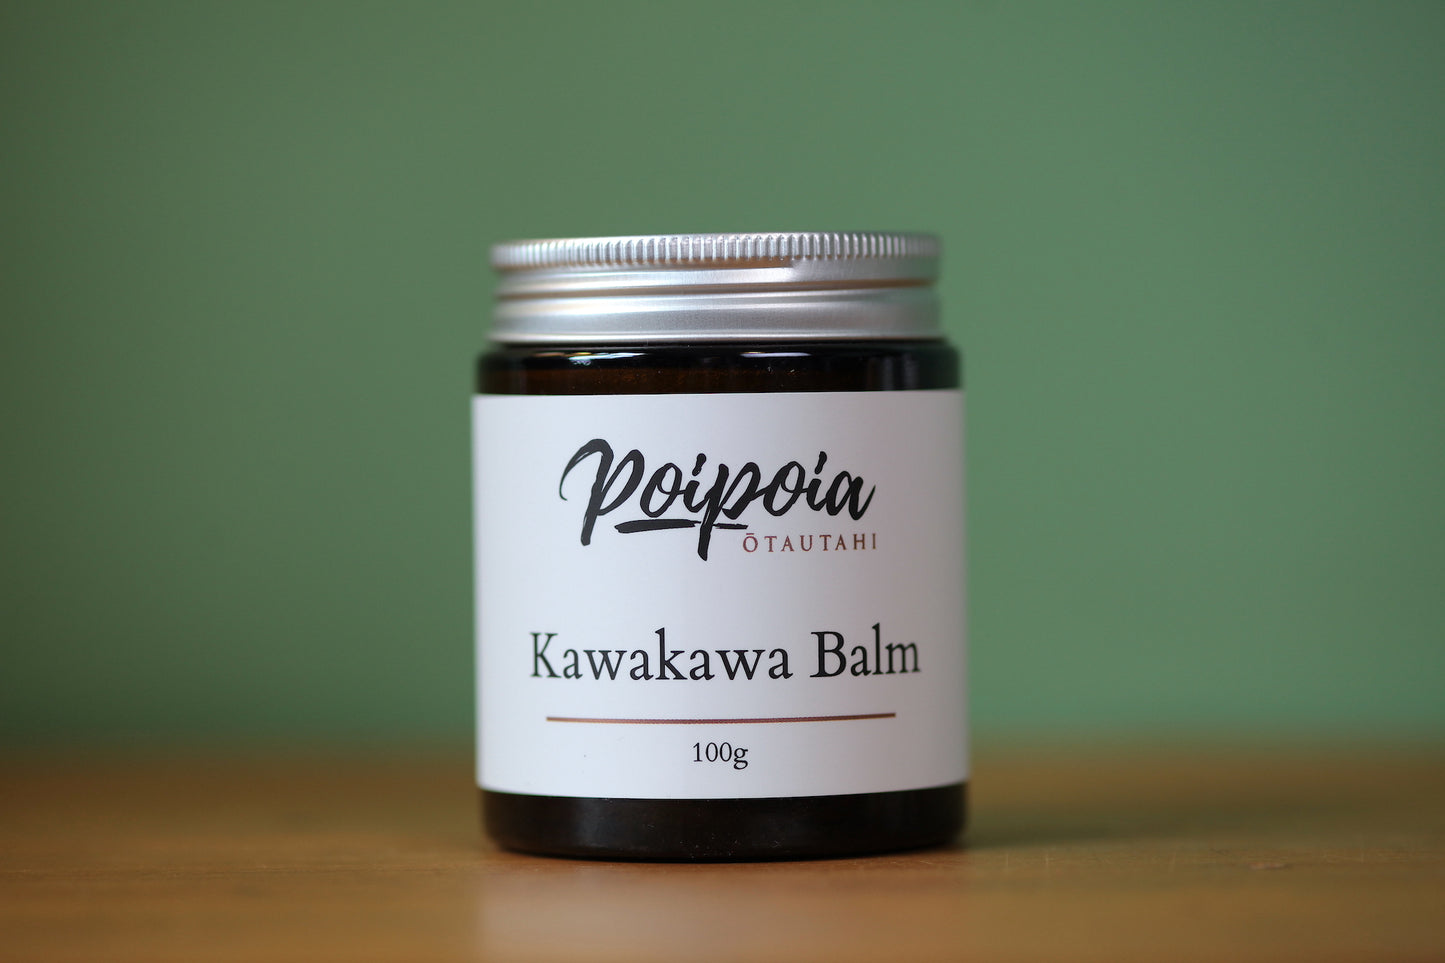 Poipoia Ōtautahi Kawakawa Balm